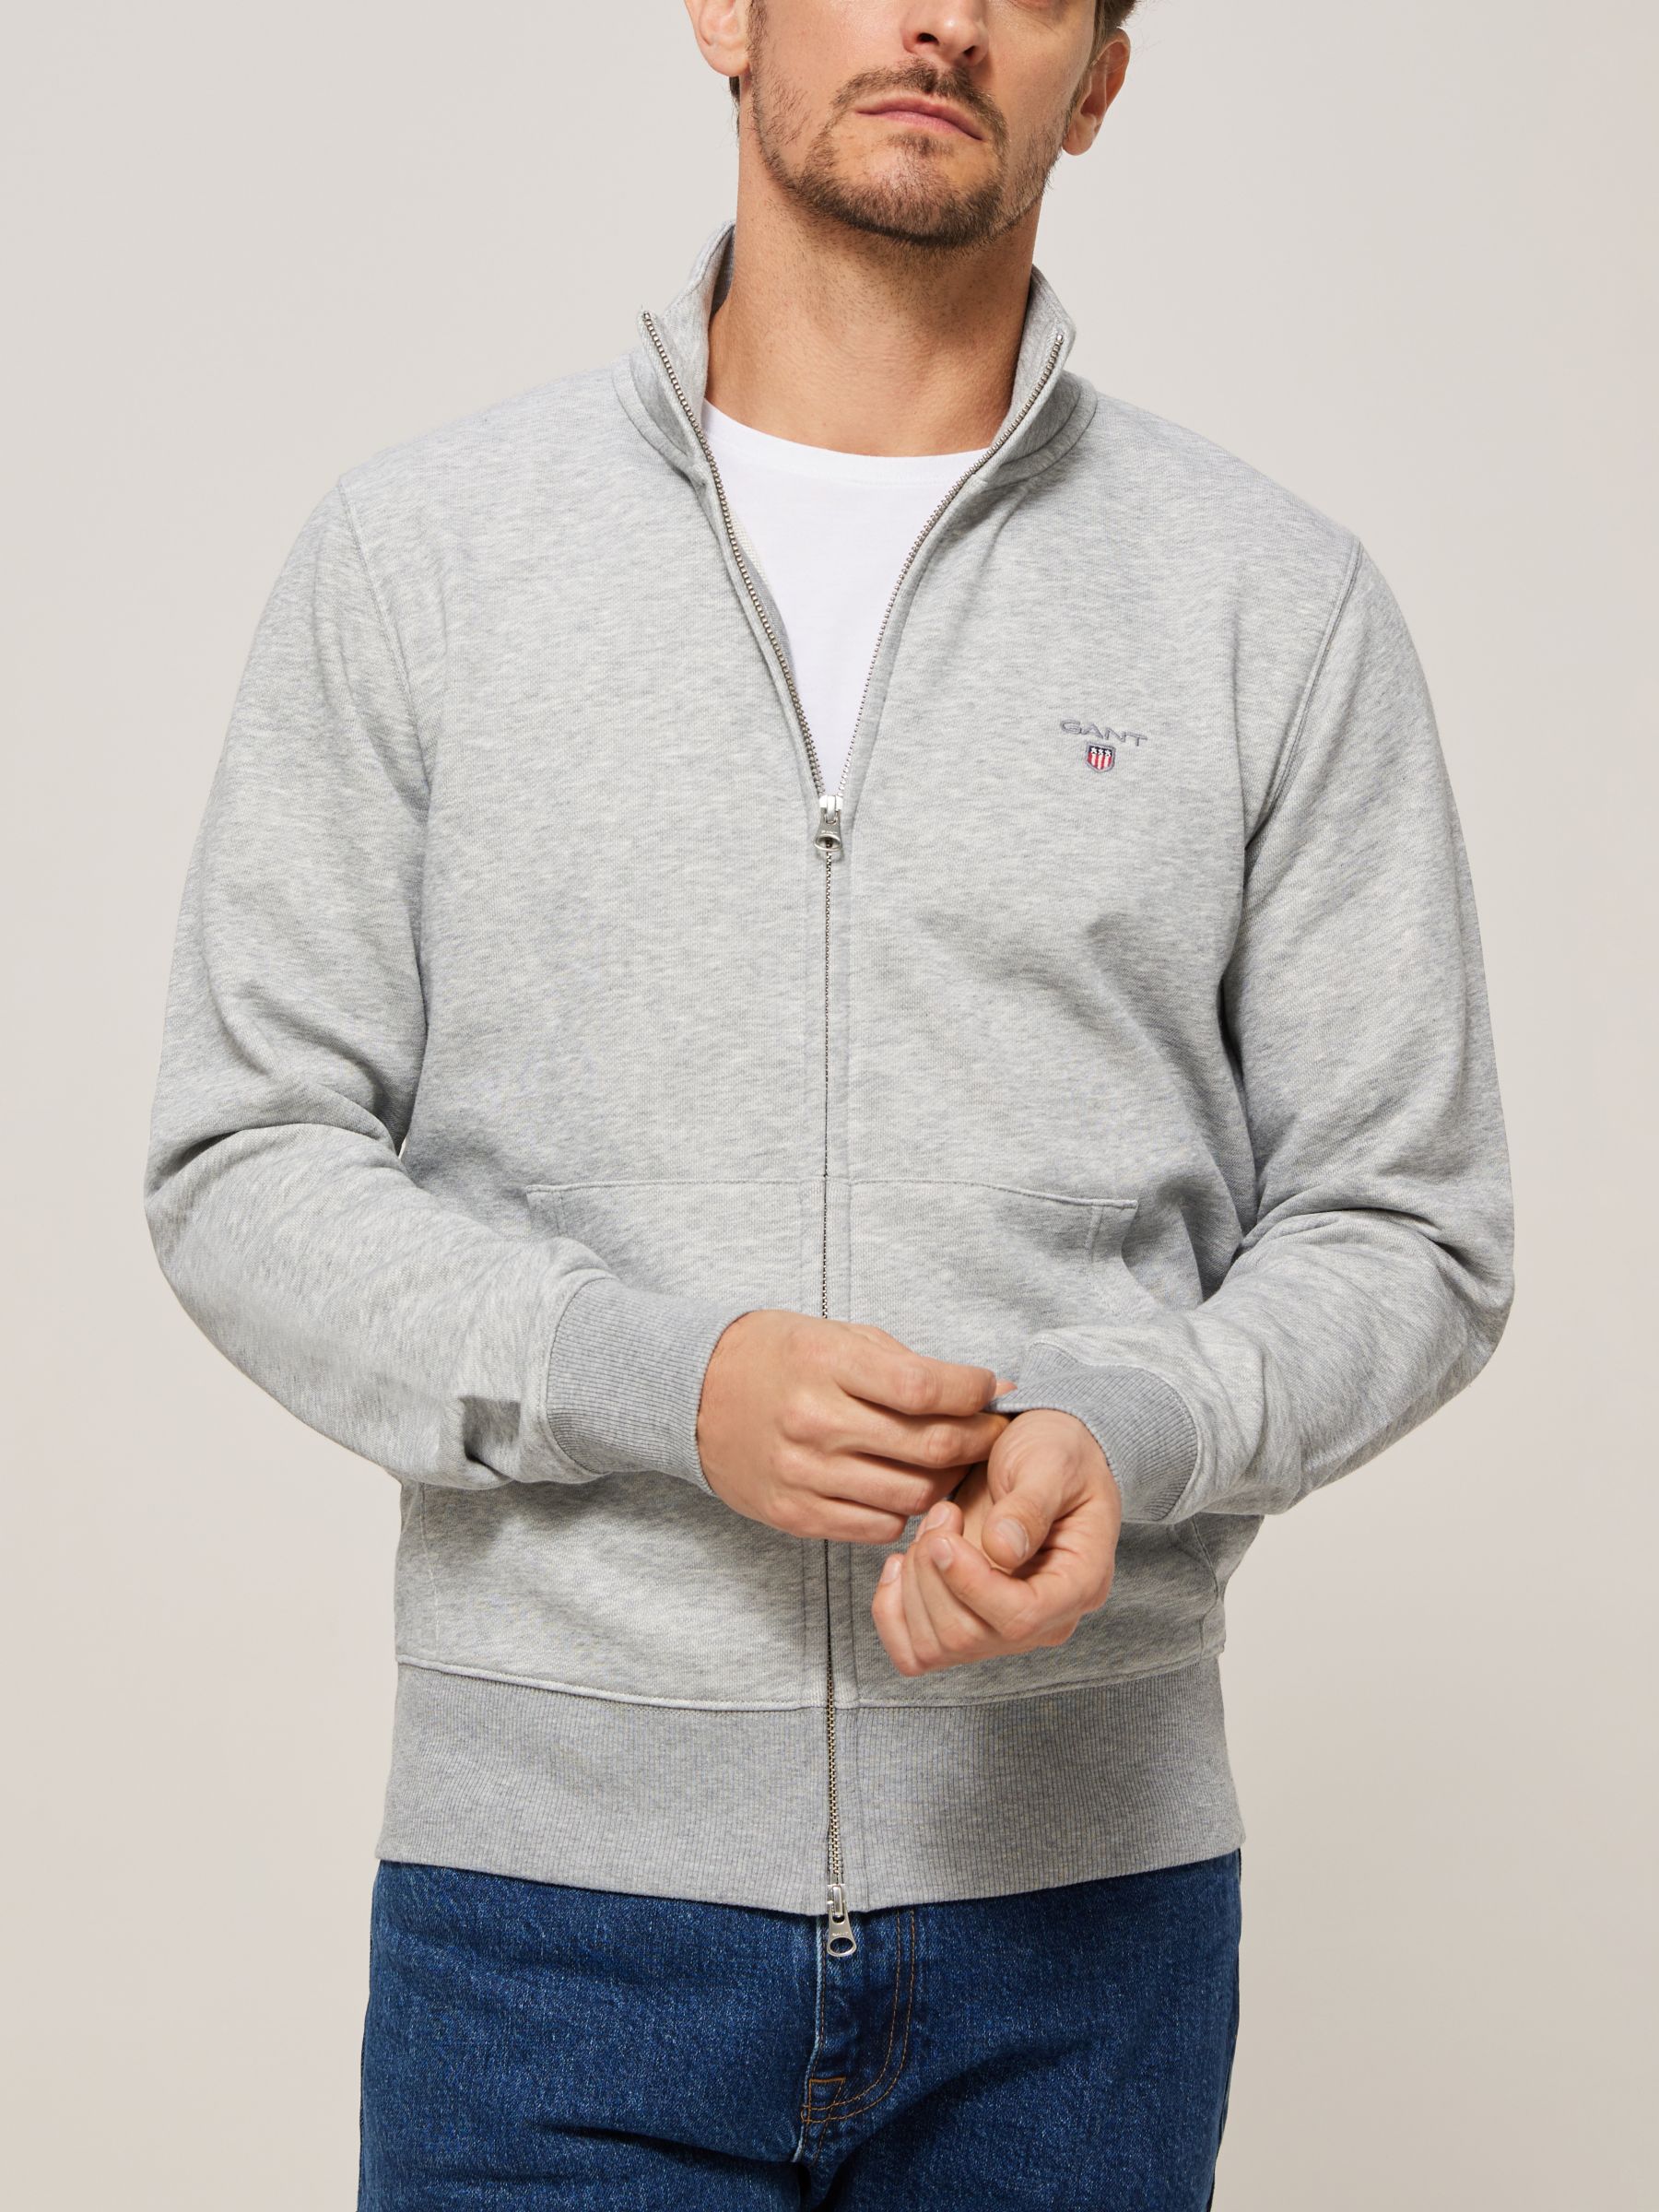 GANT Original Full Zip Sweatshirt, Grey Melange, XXL